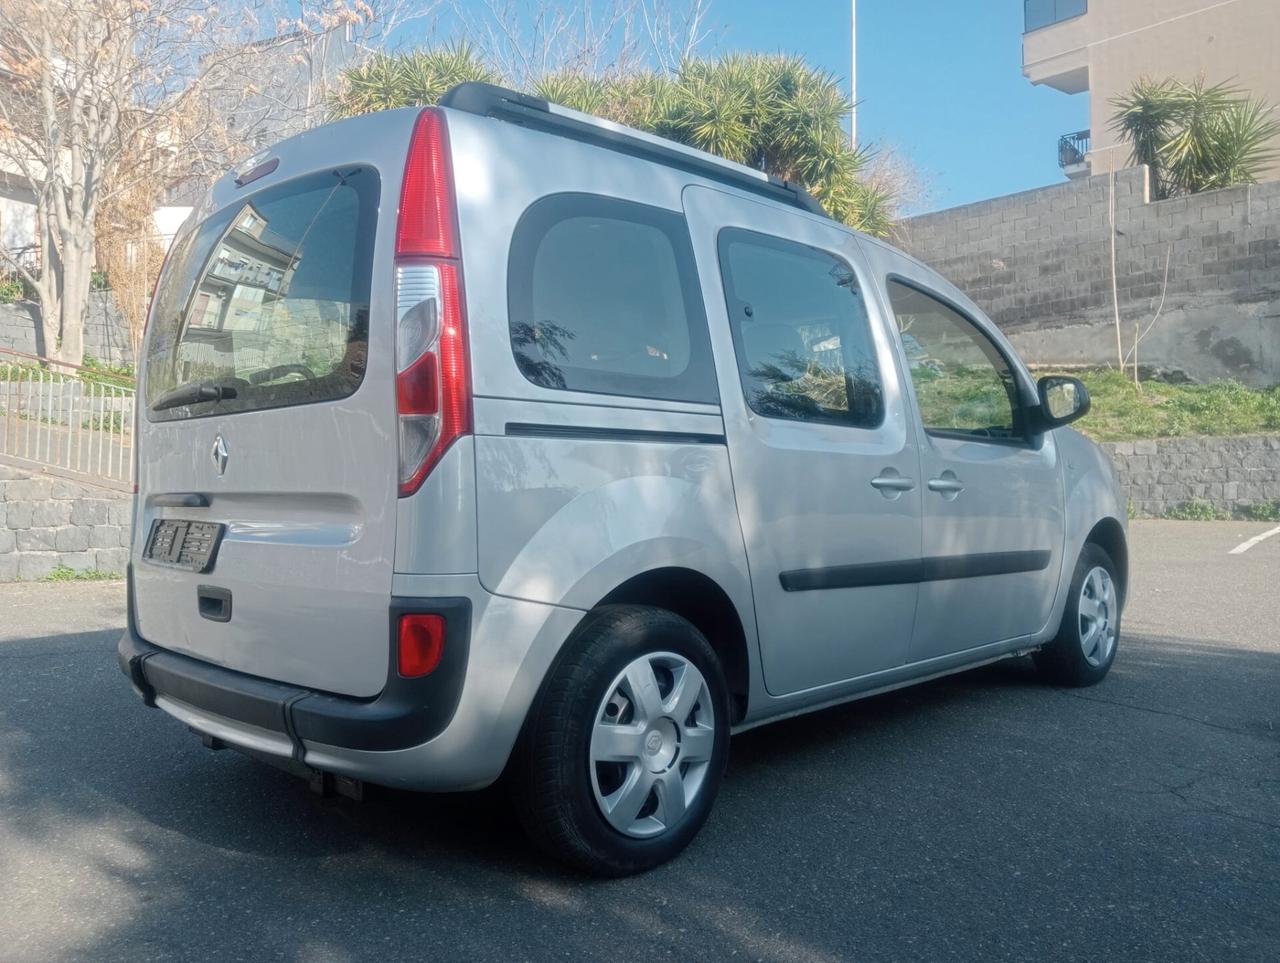 Renault Kangoo Pianale ribassato con rampa disabili in carrozzina